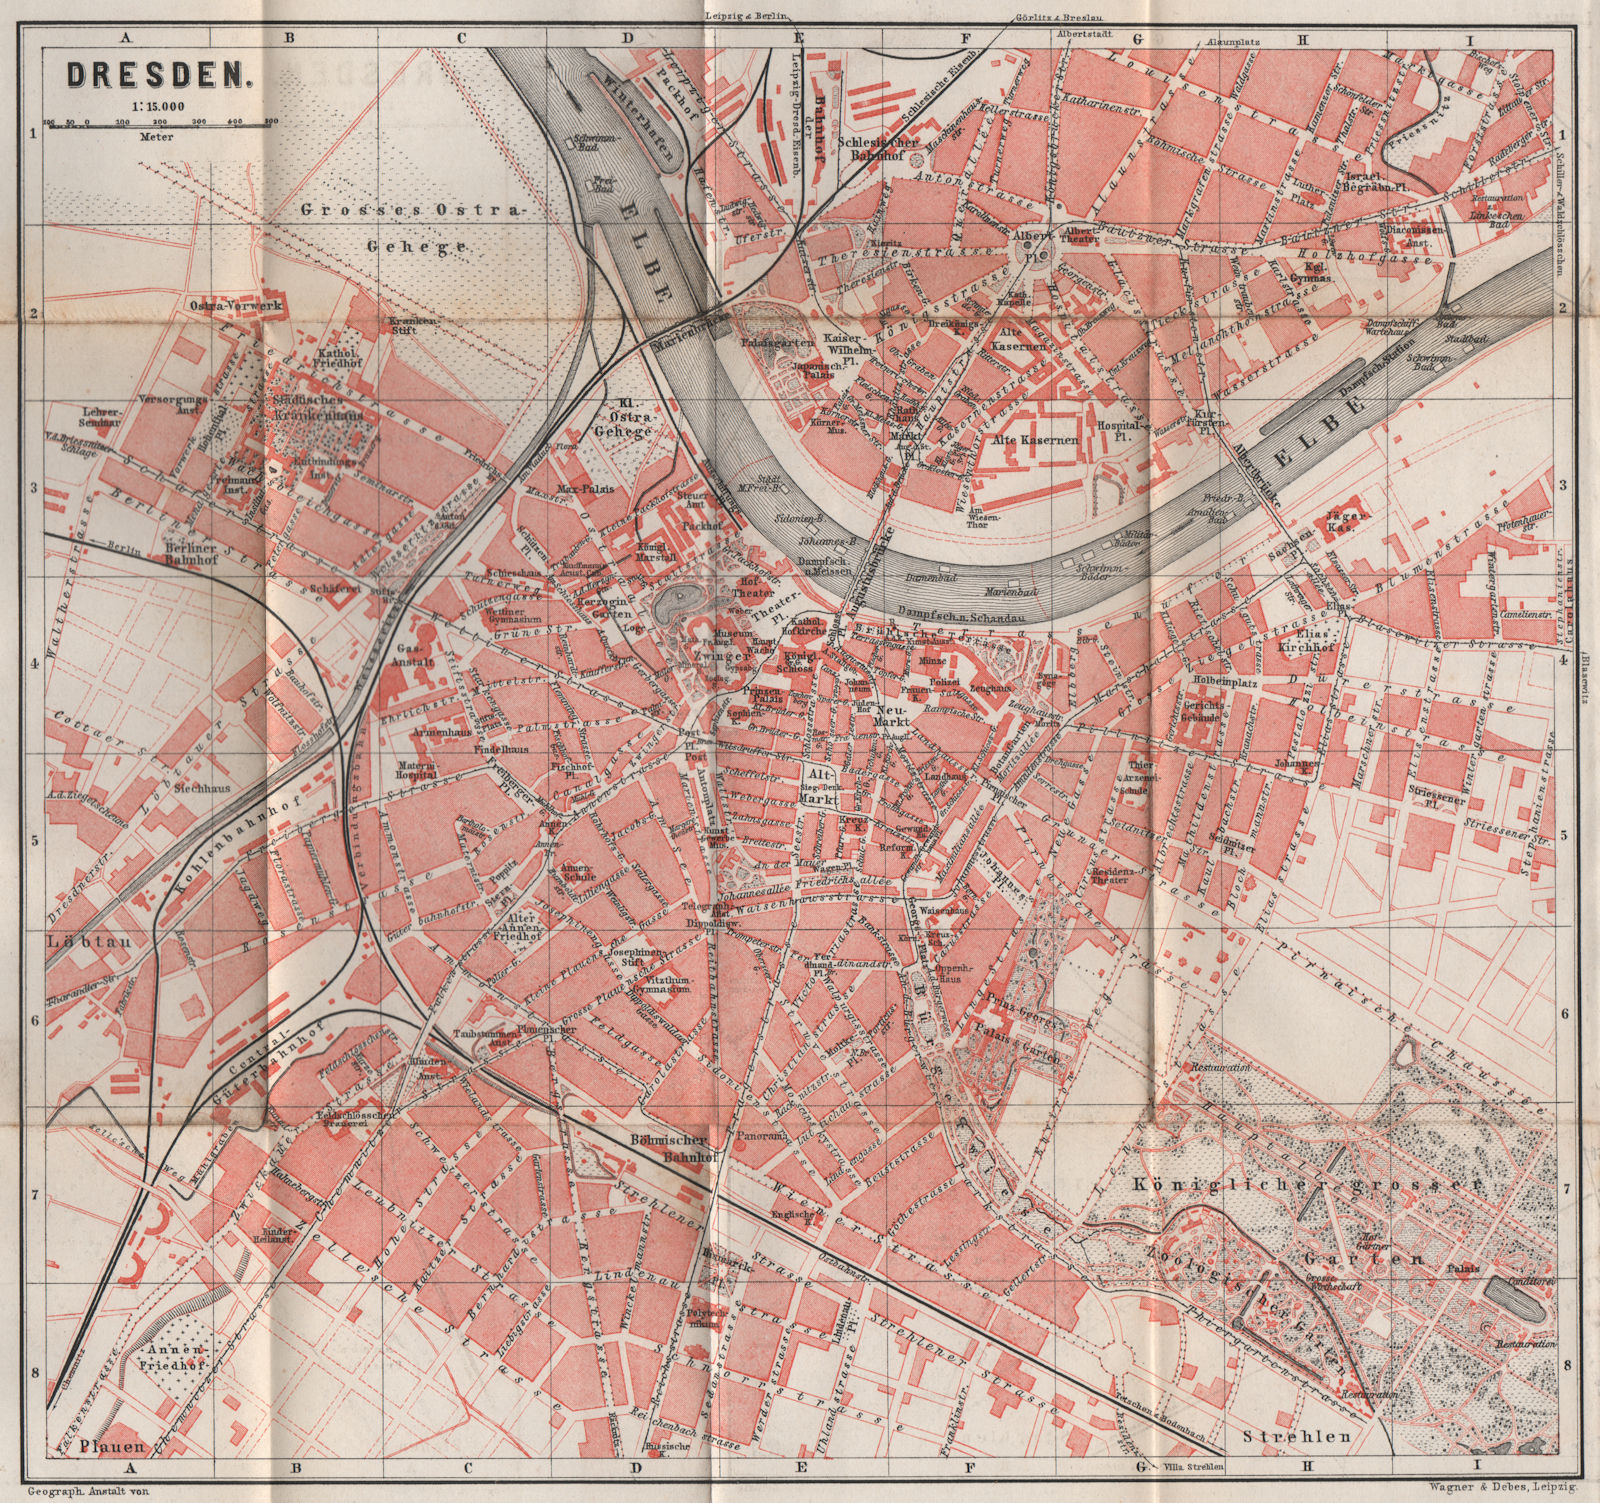 DRESDEN antique town city stadtplan II. Saxony karte. BAEDEKER 1886 old map